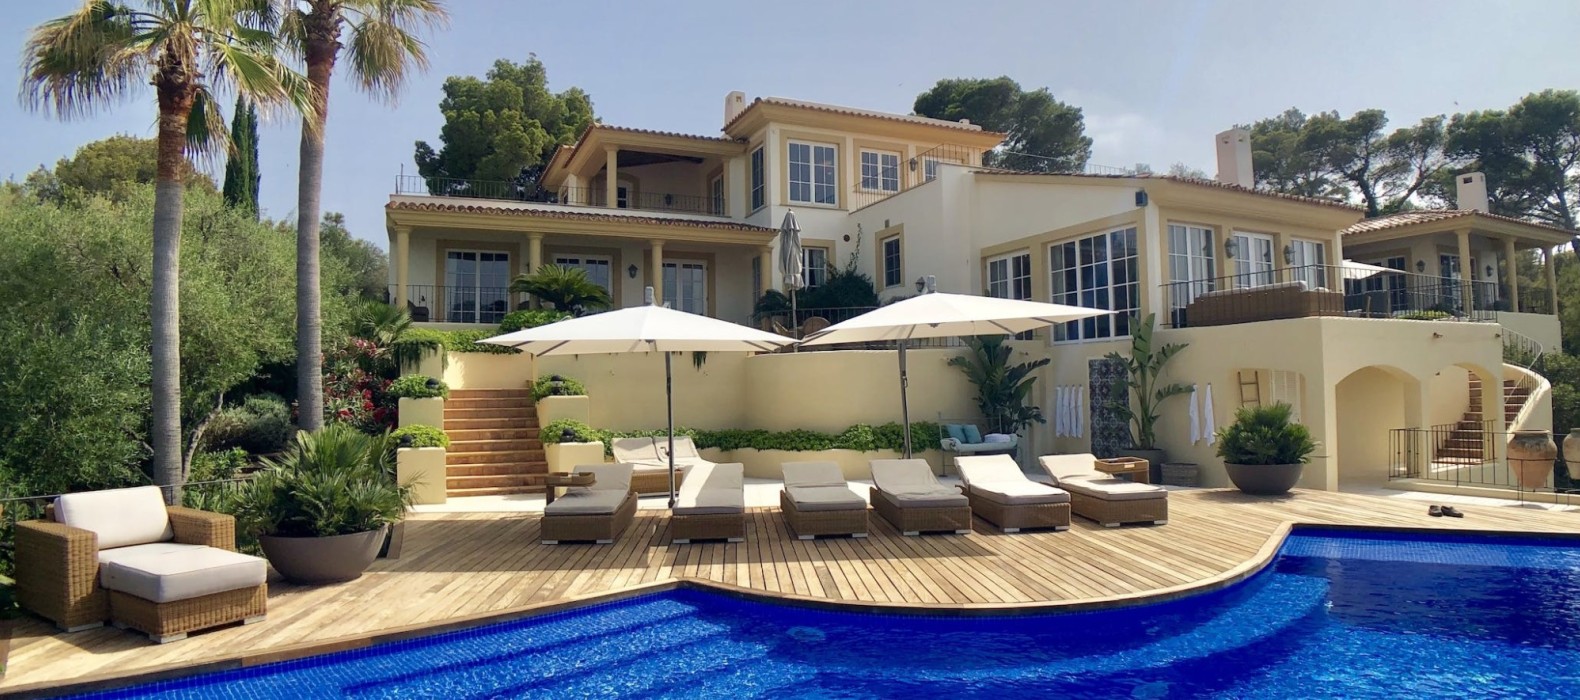 Exterior pool view of Villa Galaxy in Mallorca